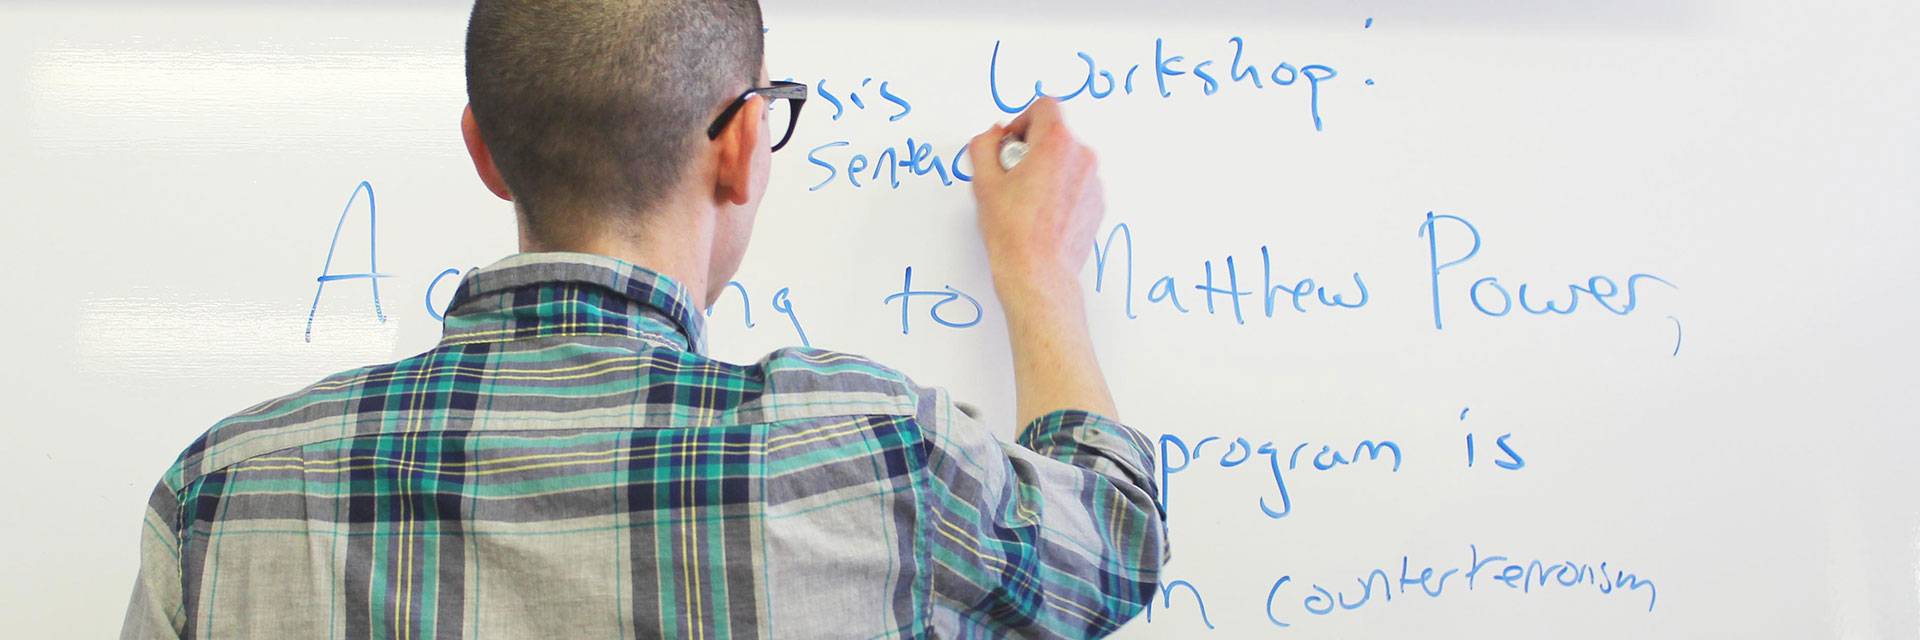 english master's student writing at whiteboard